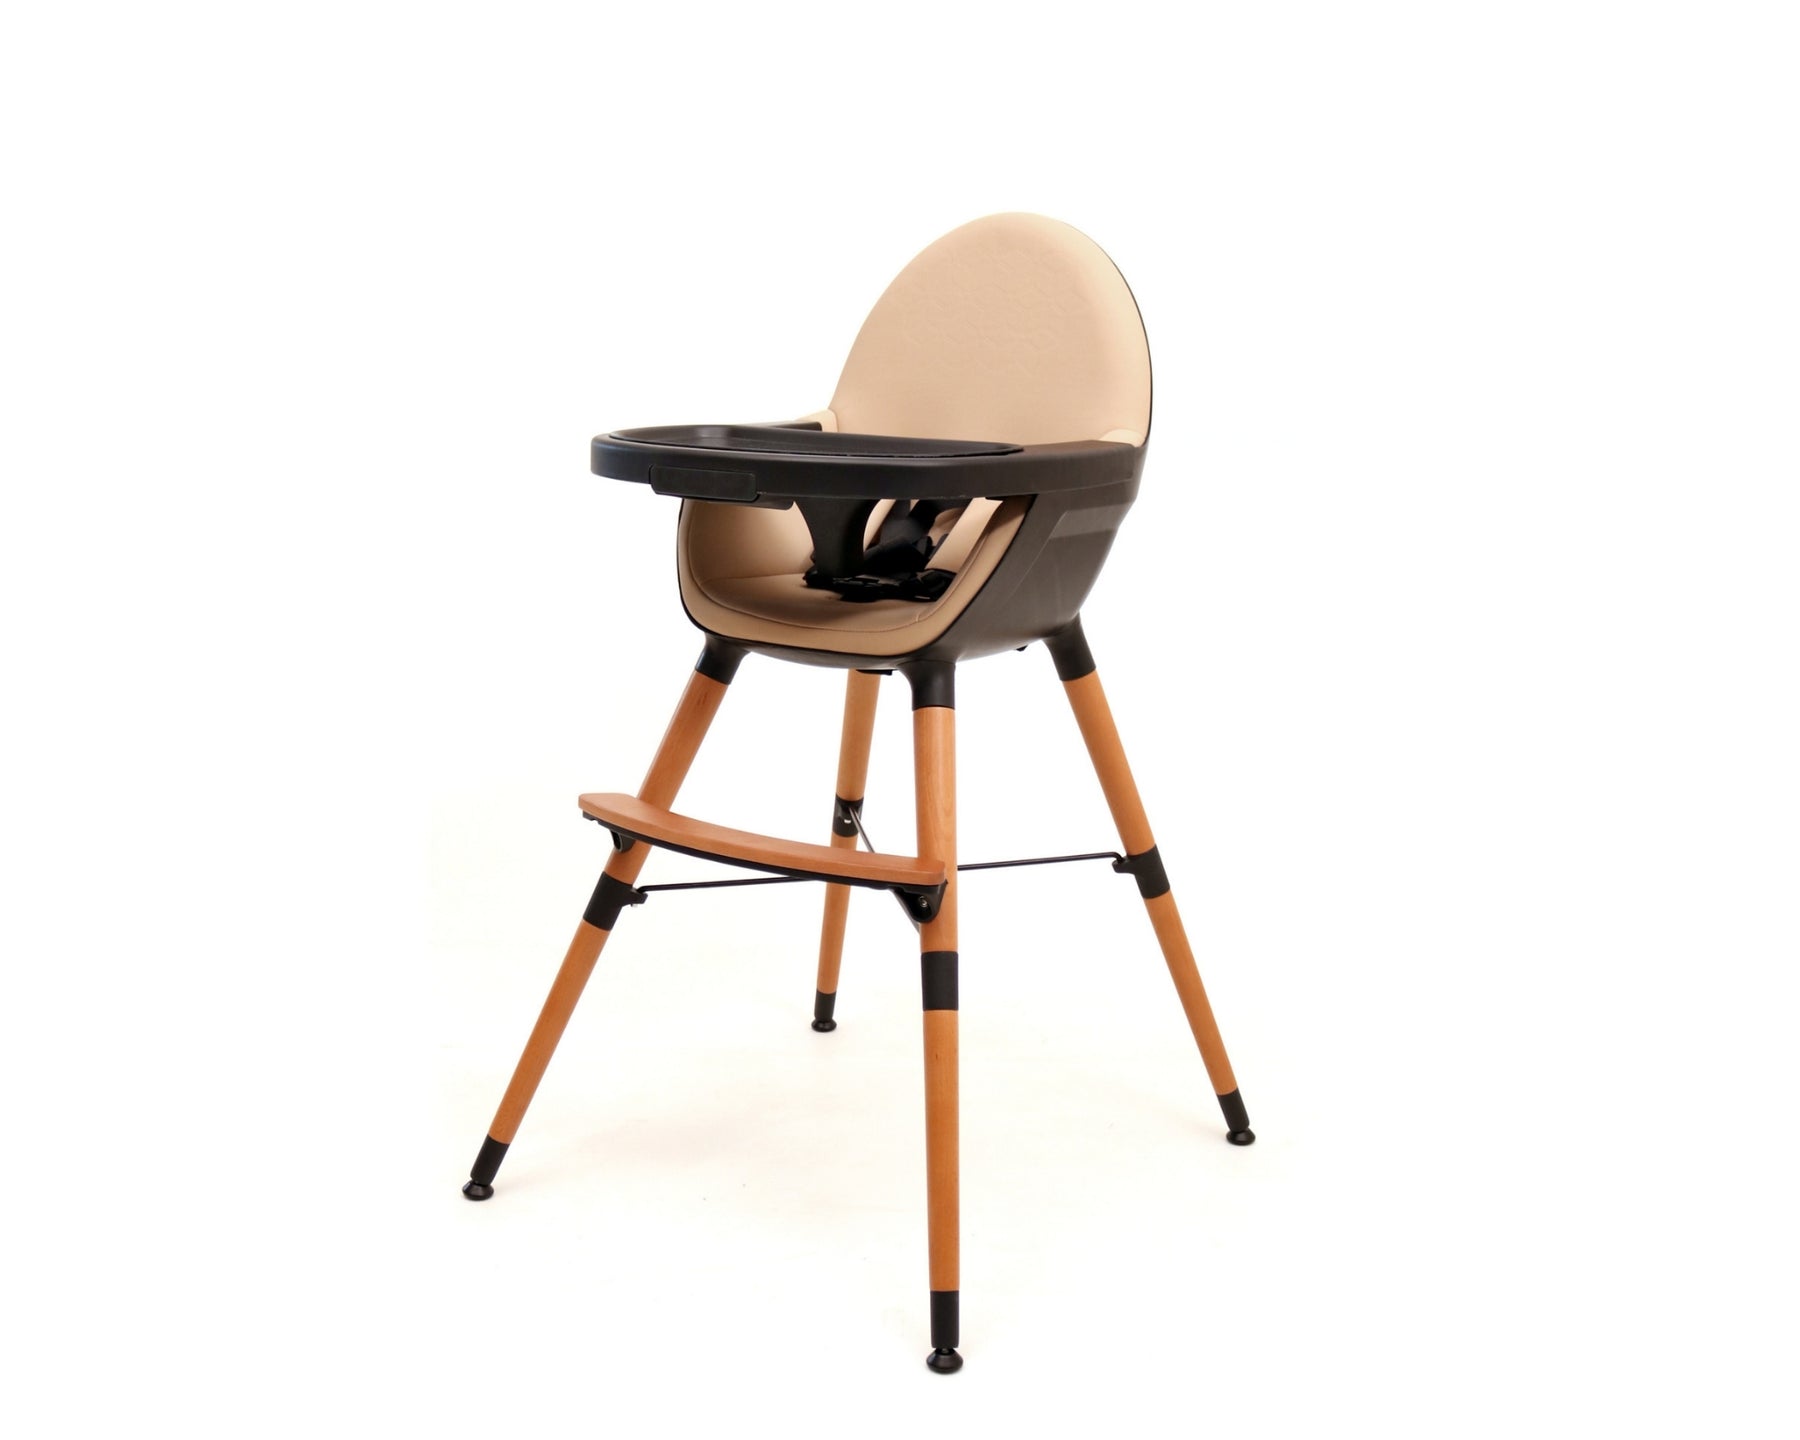 Chaise Haute 3 hauteurs Confort AT4 - High Chairs & Booster Seats par AT4